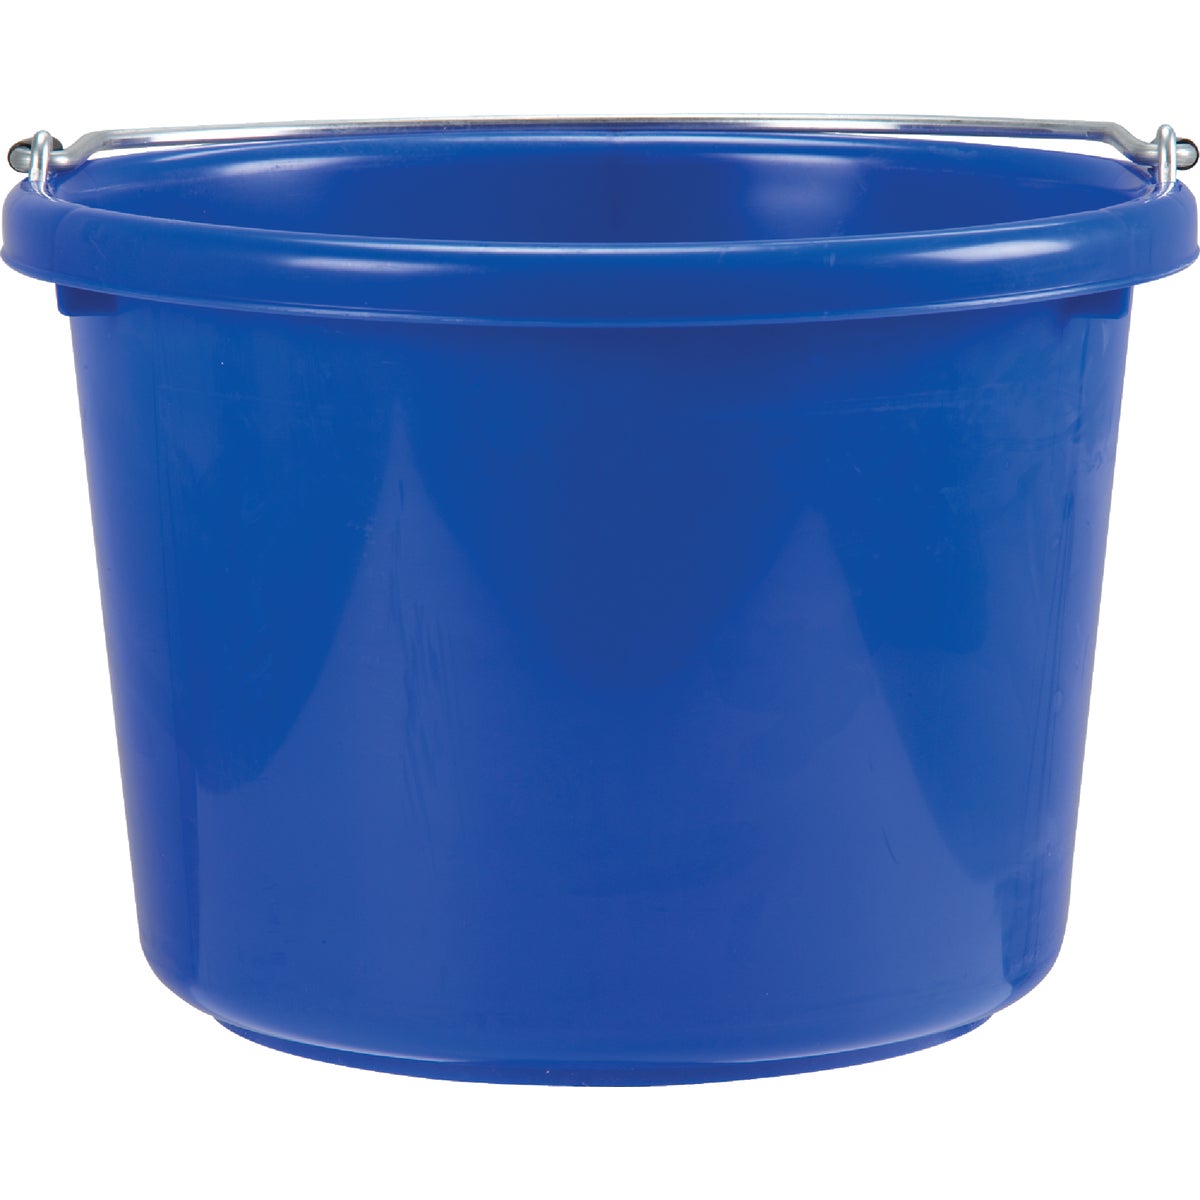 Item 755184, Durable bucket with an 8-quart capacity. Heavy-duty design.